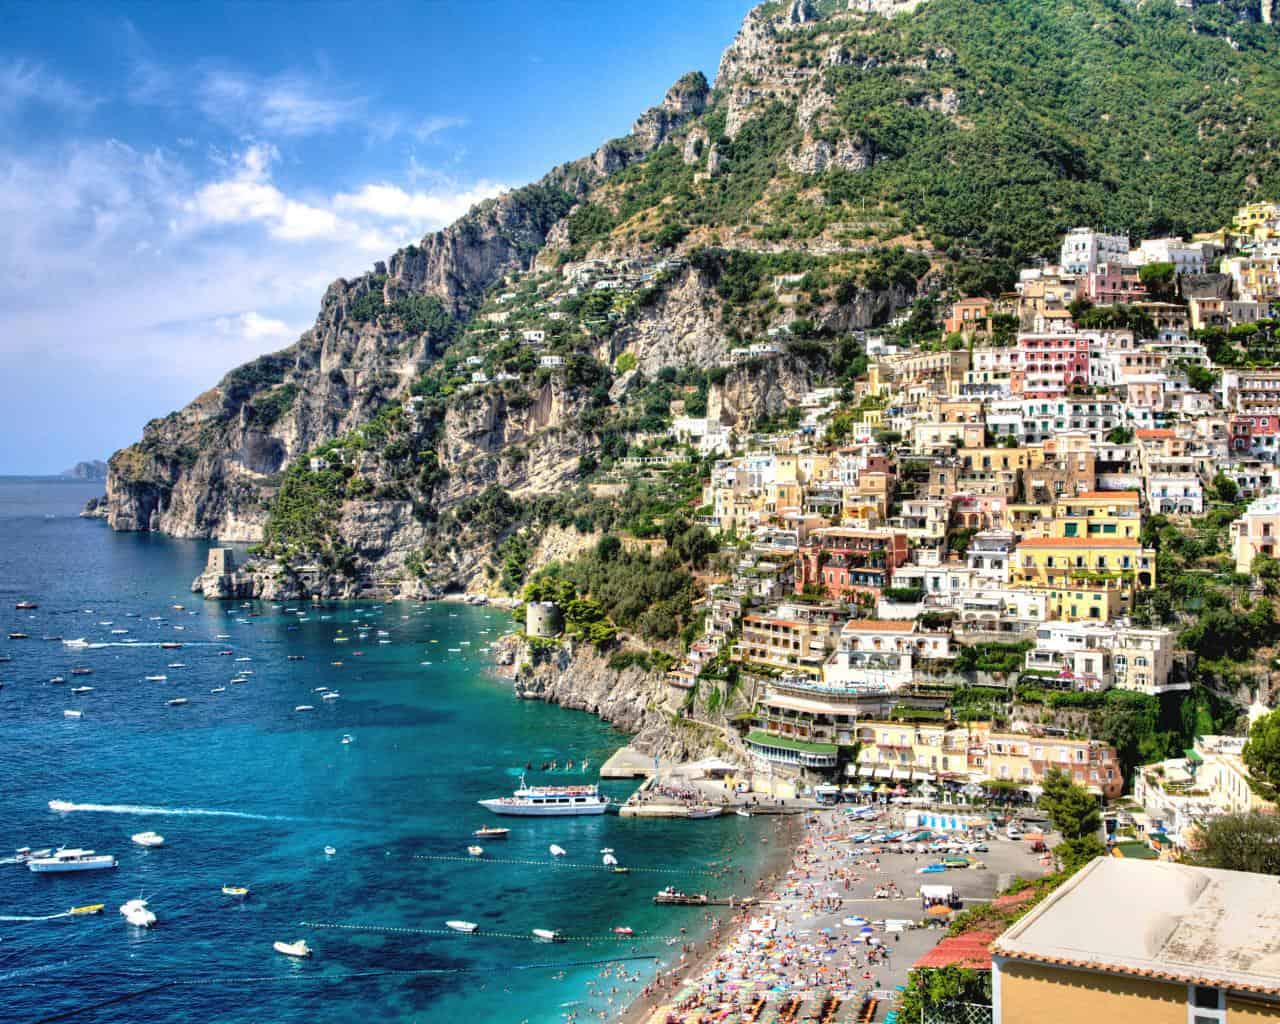 Positano-Amalfi-Coast-Italy10.jpg